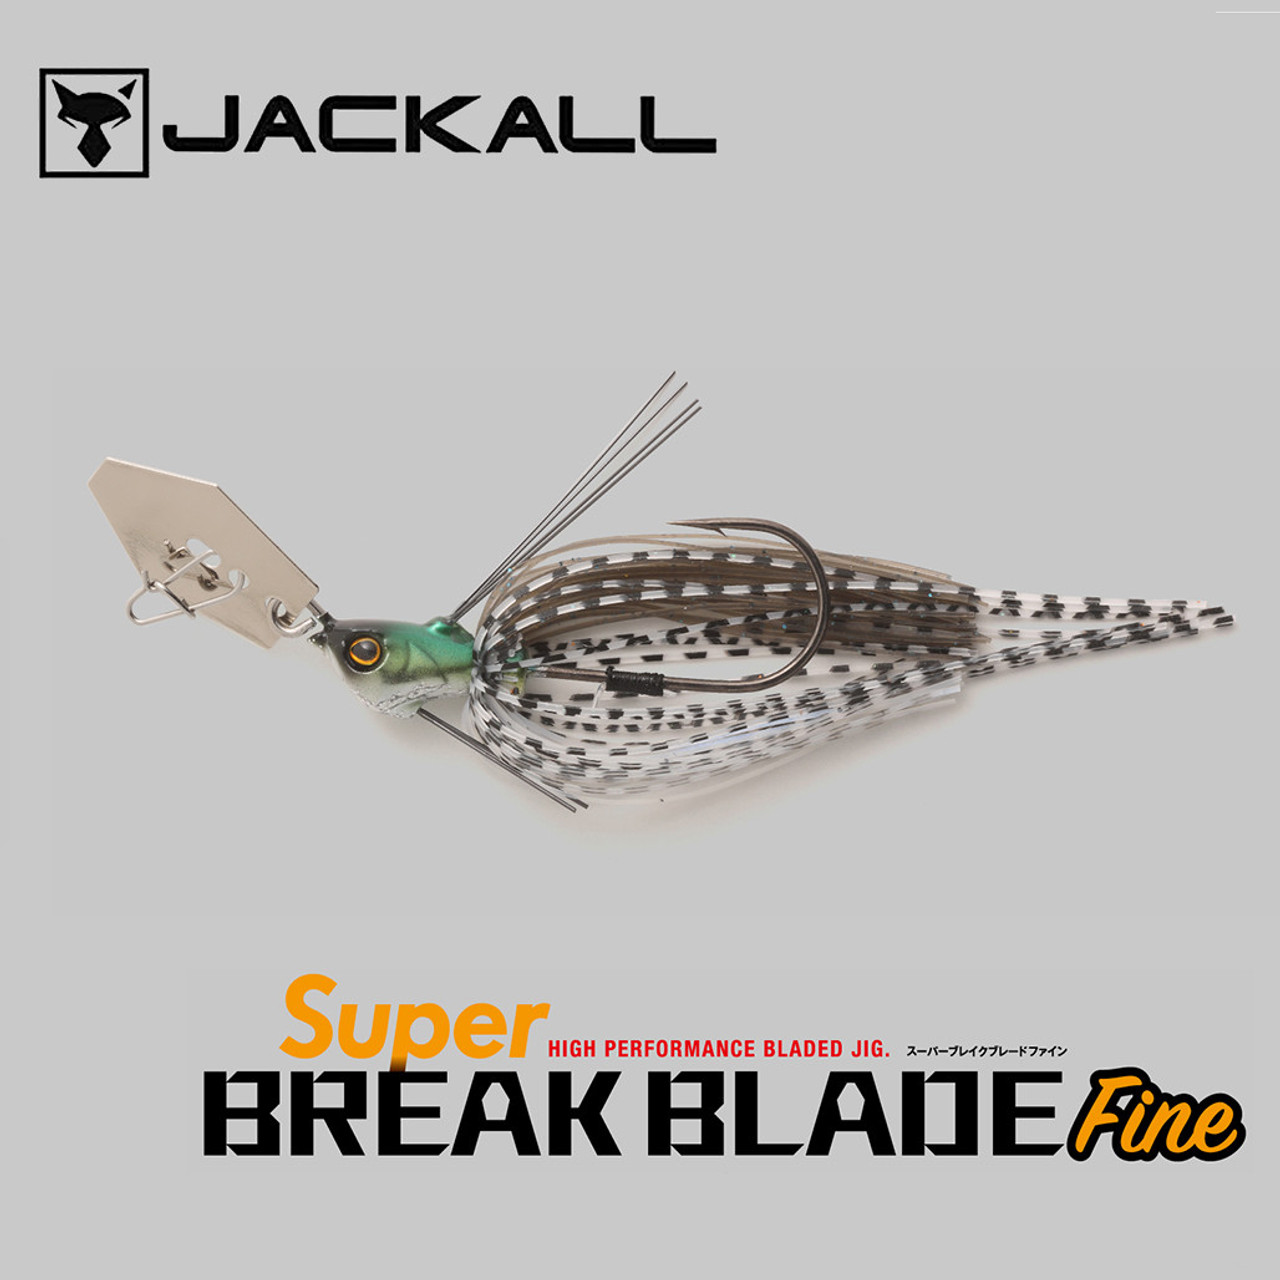 Jackall SUPER BREAK BLADE FINE 3/16 oz Compact Bladed Jig NEW